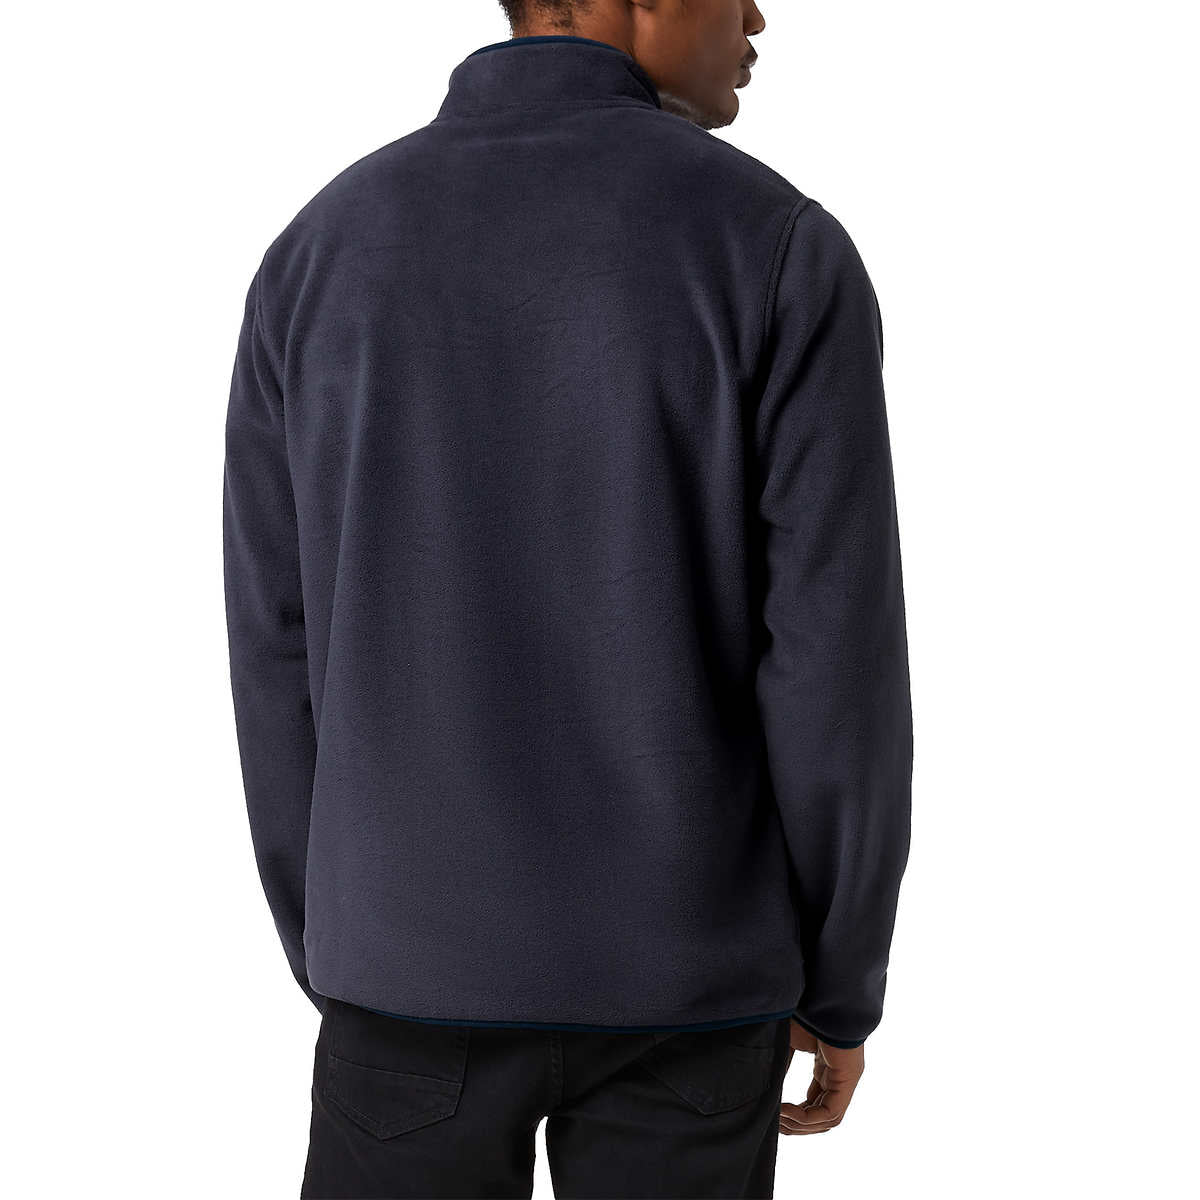 32 Degrees Men’s Quater Snap Soft Fleece Sweatshirt Casual Pullover Top